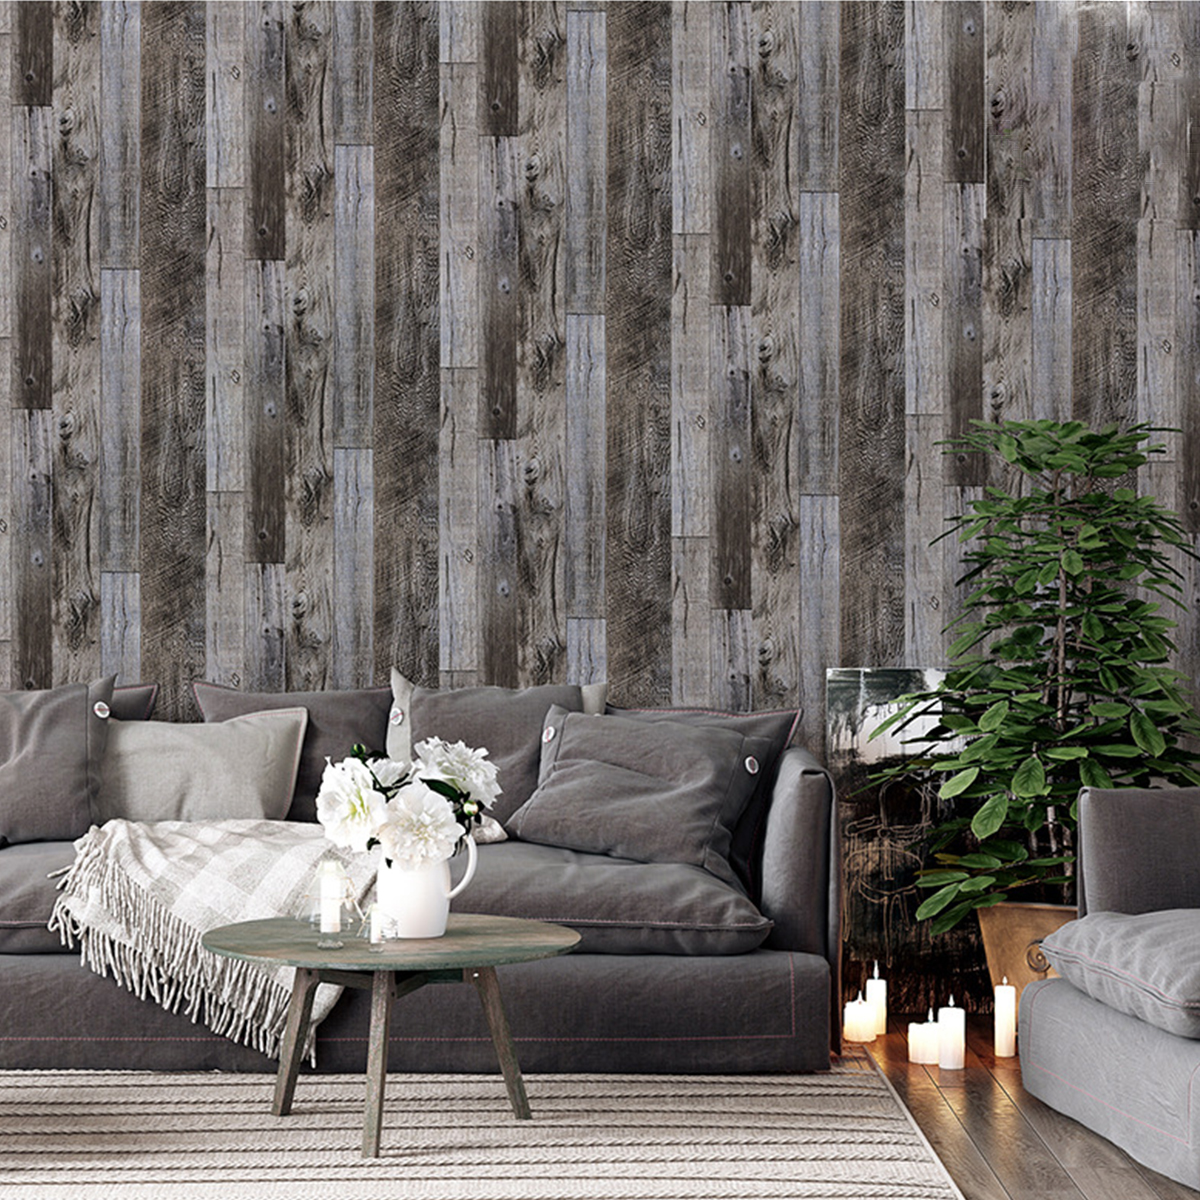 3D-Retro-Wood-Grain-Stick-Self-adhesive-Wallpaper-Home-Decor-Heavy-Duty-Wall-Stickers-1743085-7